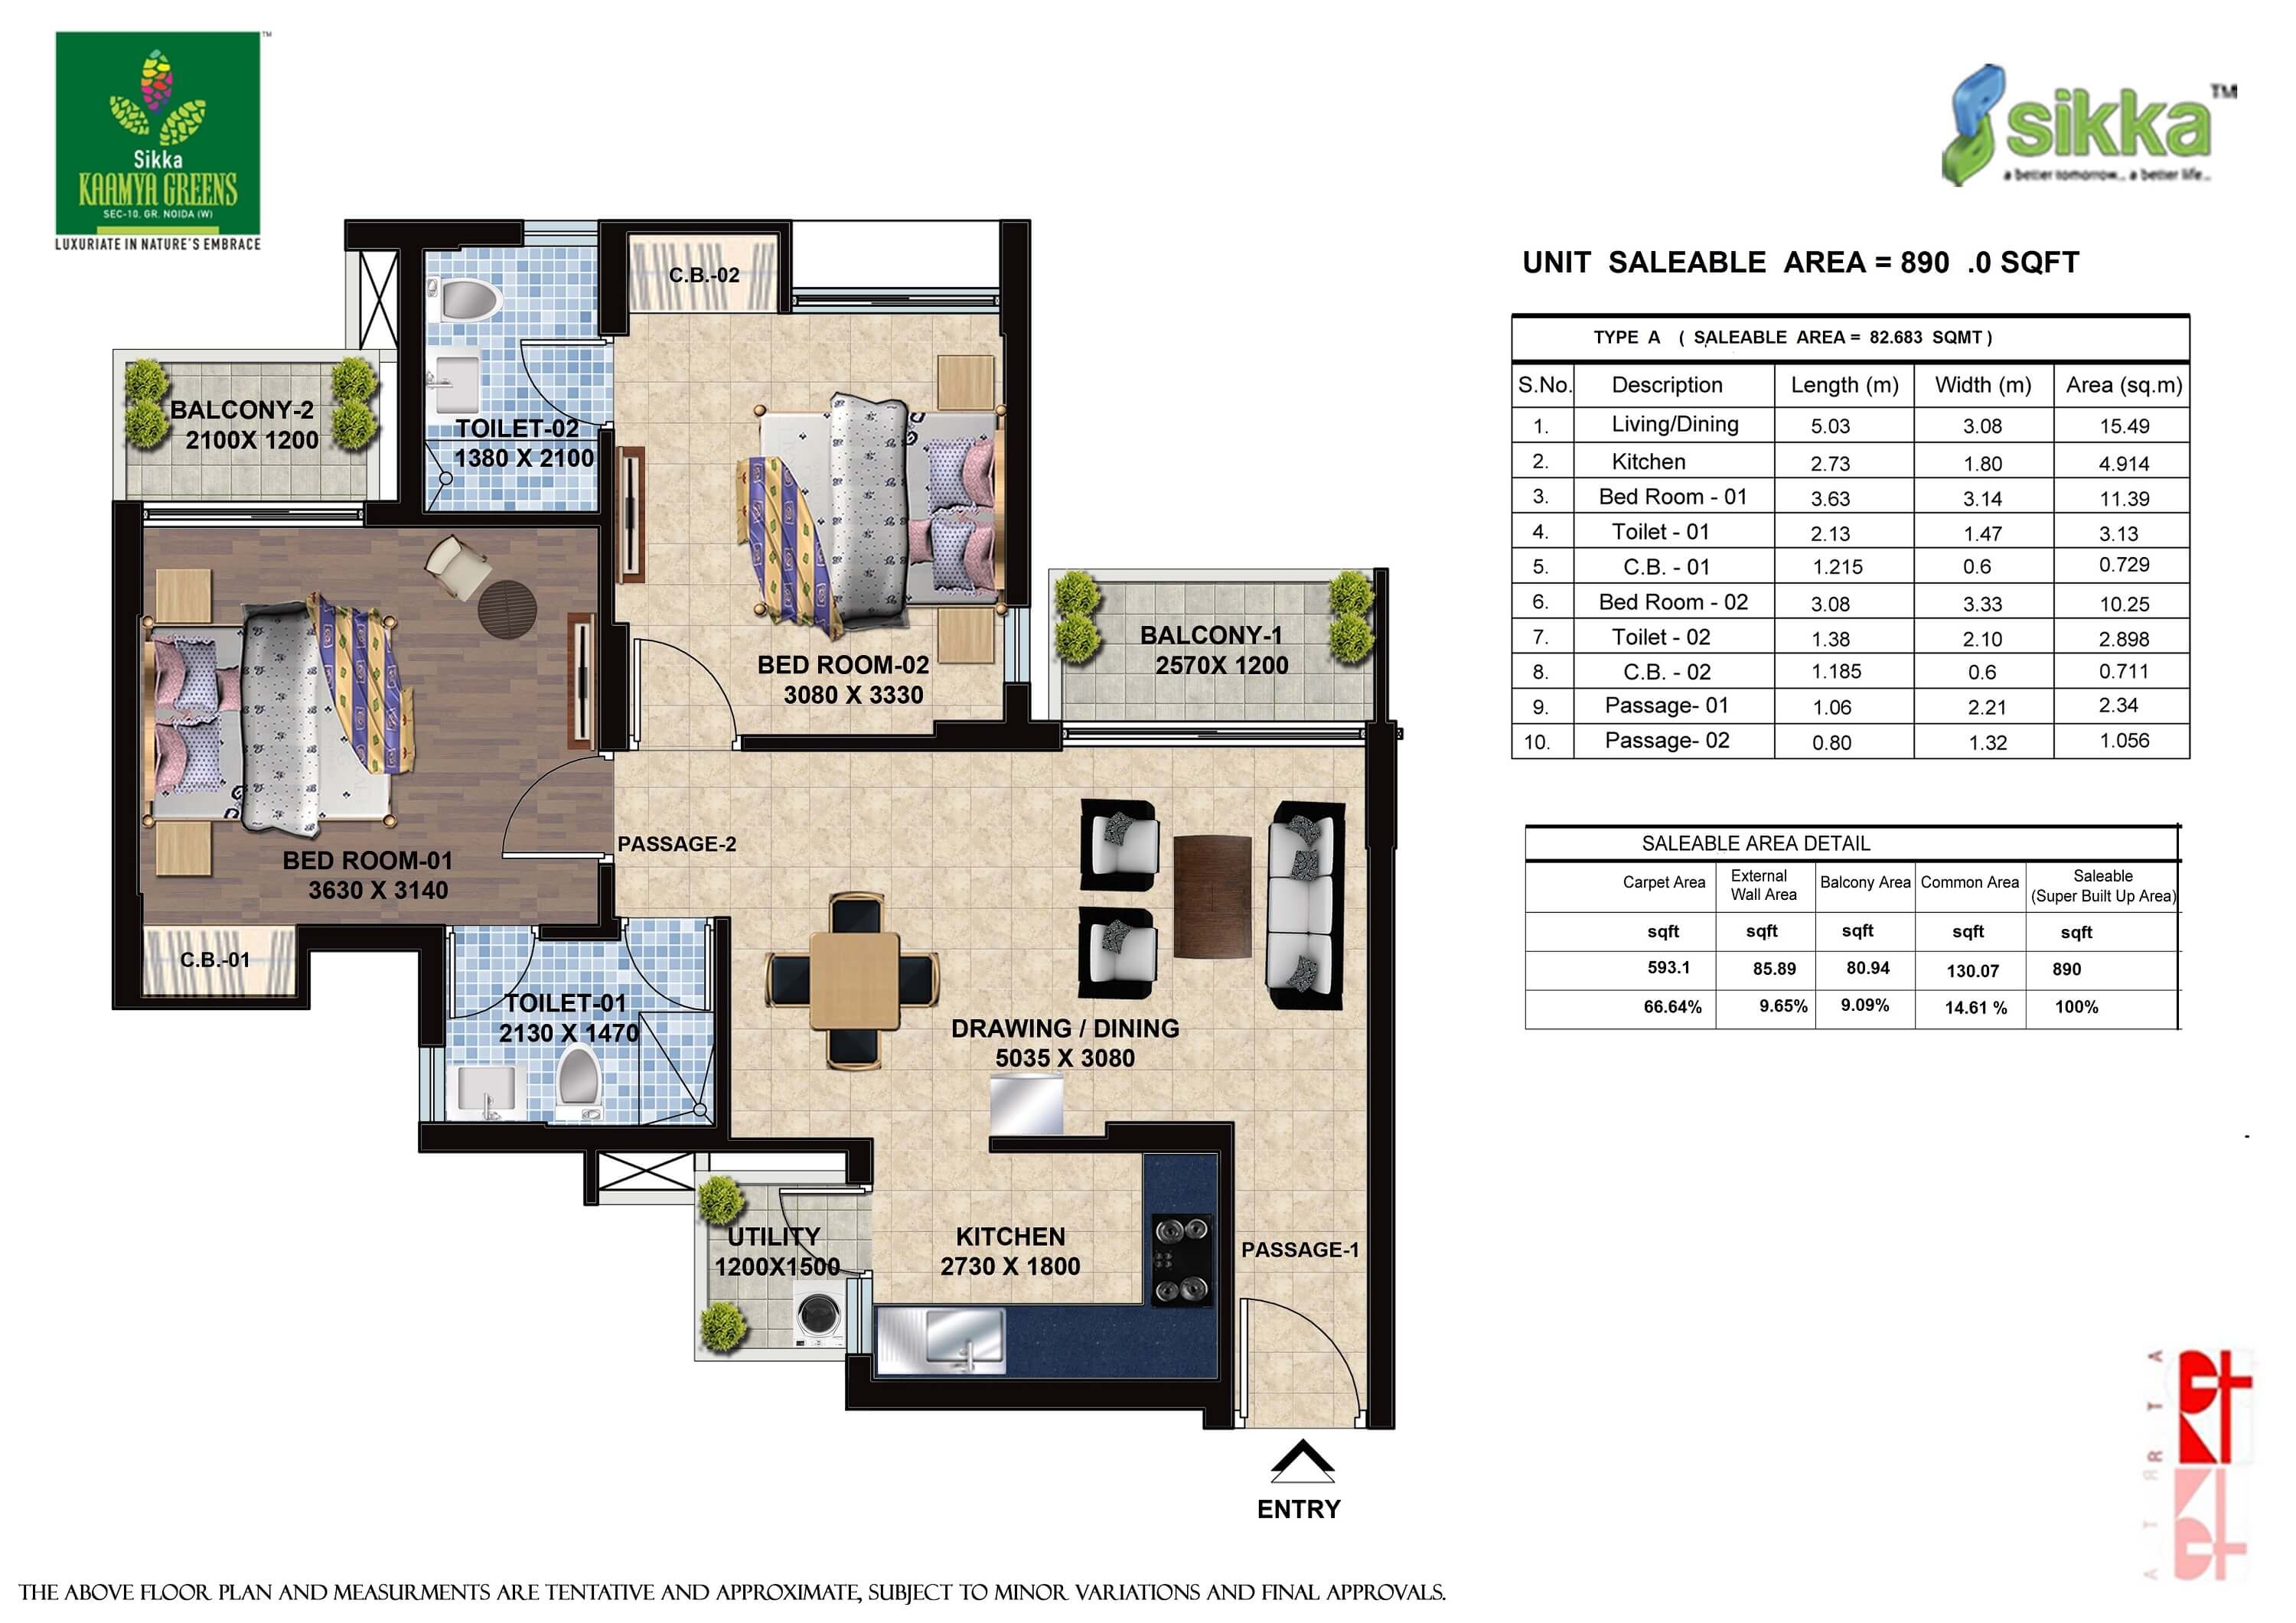 Kaamya Greens 2BHK Floor Plan - Area : 890 SQFT